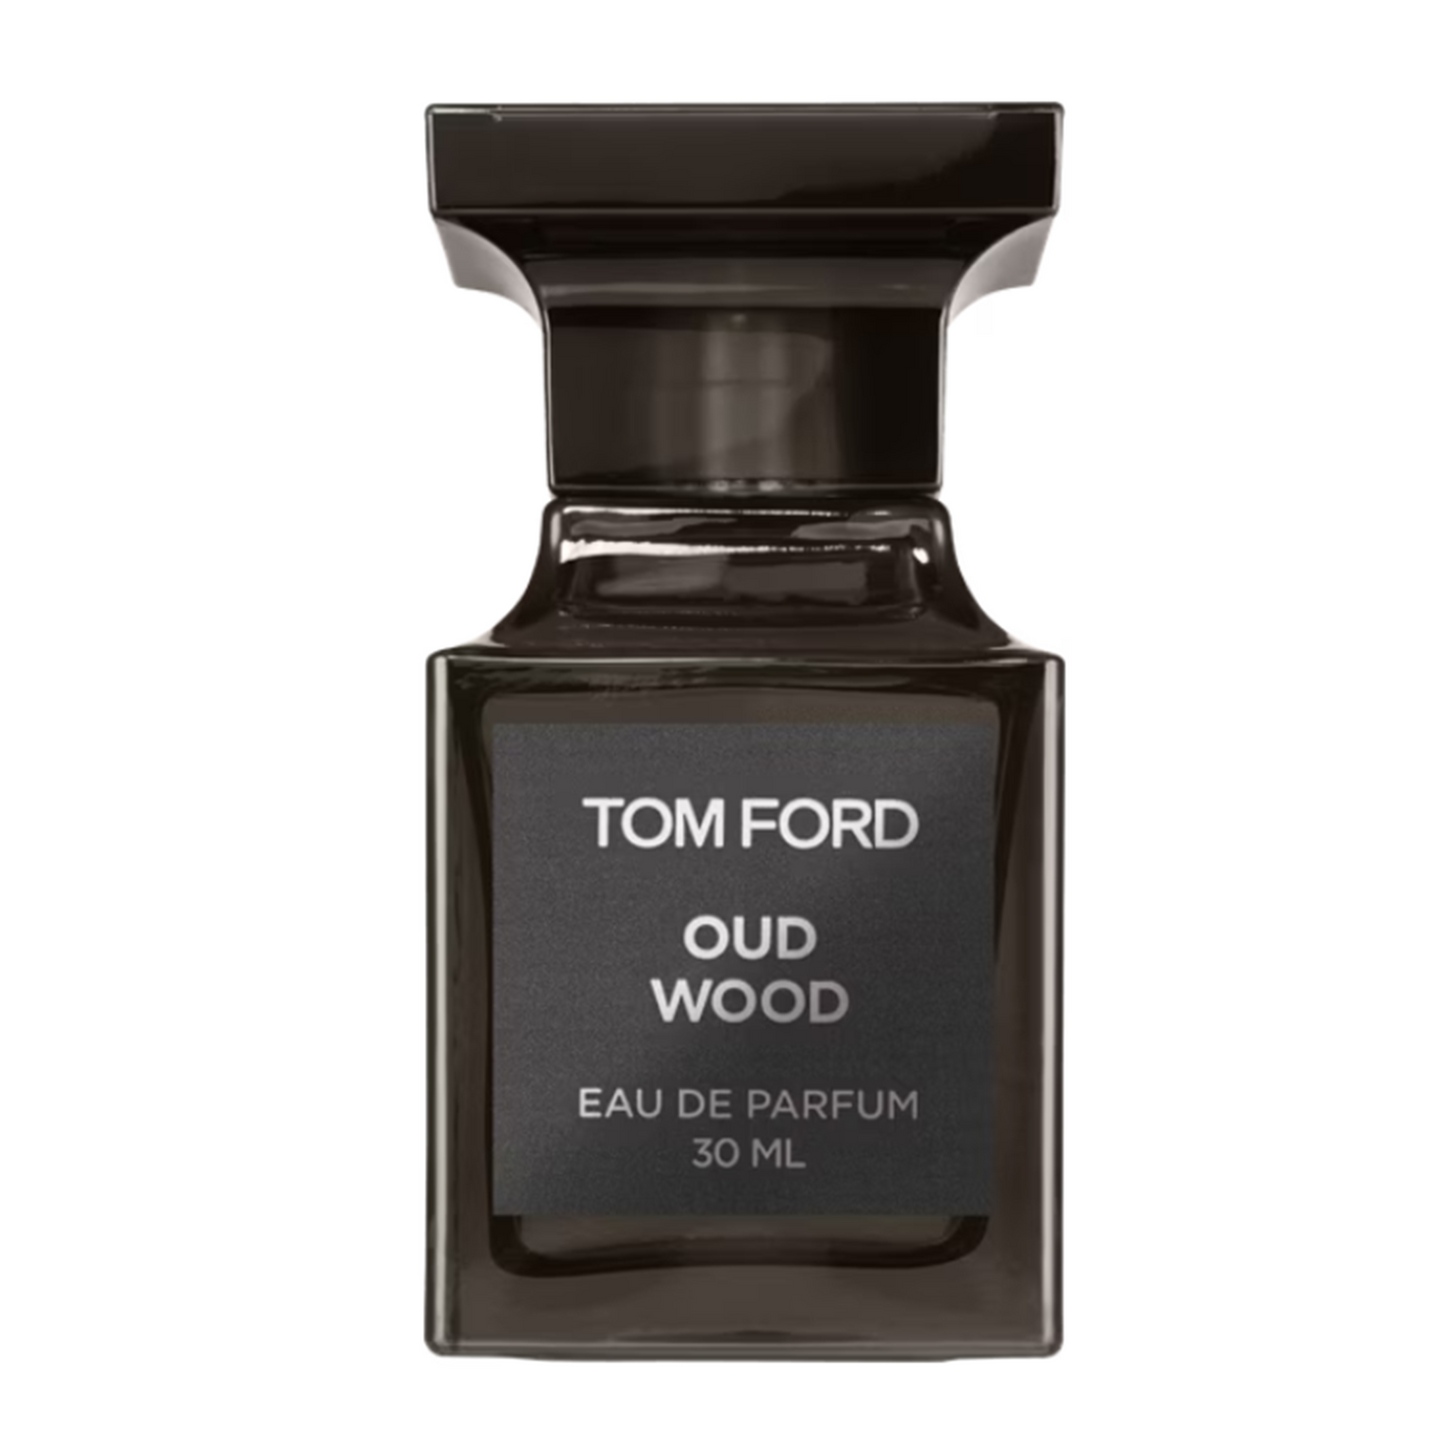 TOM FORD - Oud Wood Duftprobe Parfümprobe Abfüllung